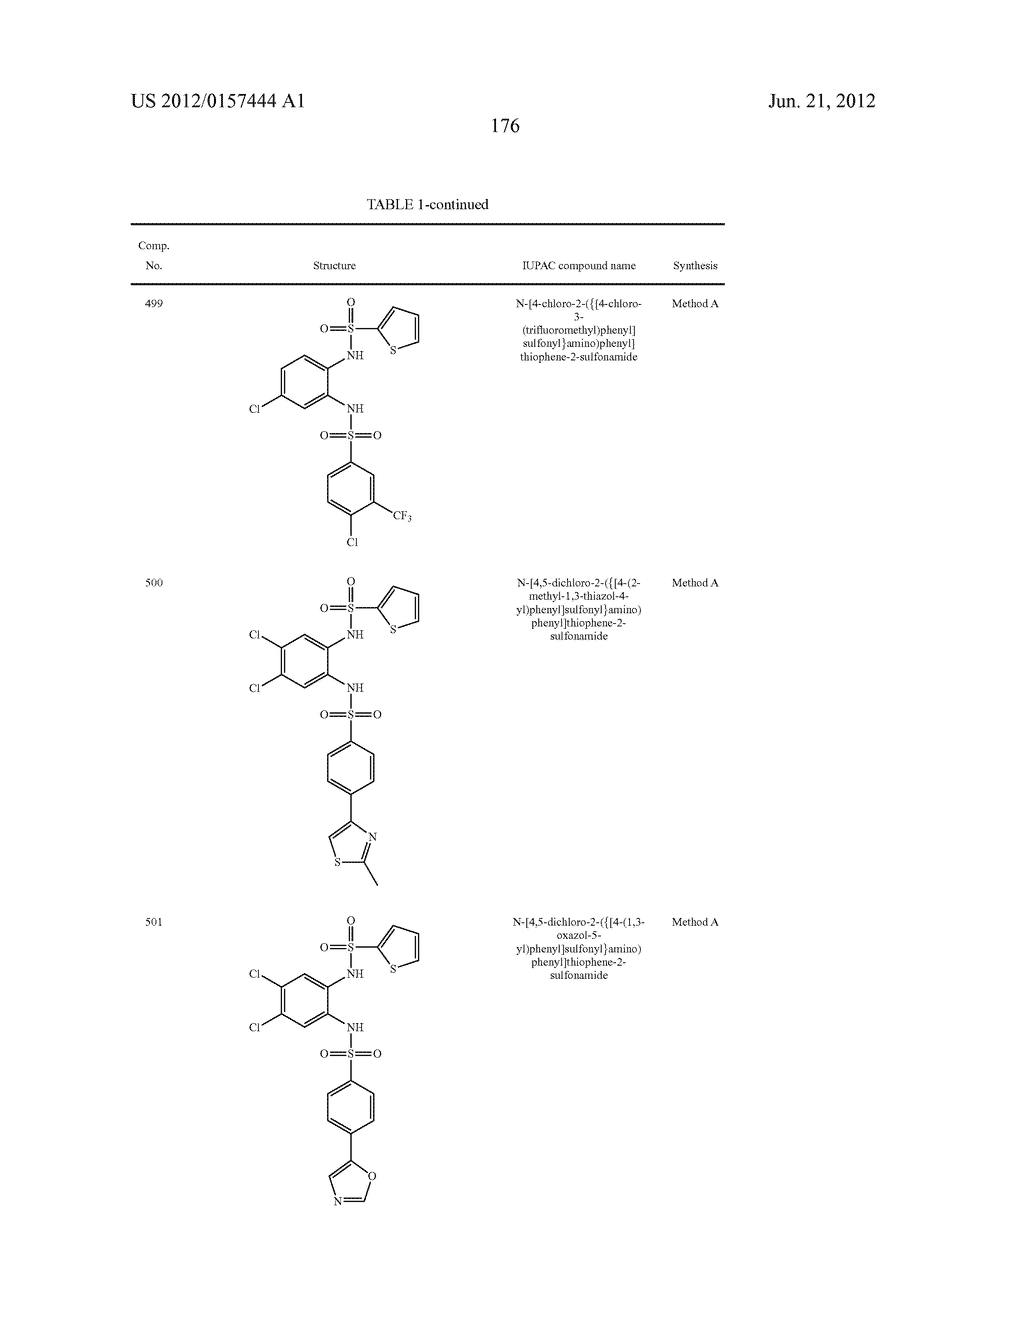 NOVEL 1,2- BIS-SULFONAMIDE DERIVATIVES AS CHEMOKINE RECEPTOR MODULATORS - diagram, schematic, and image 177